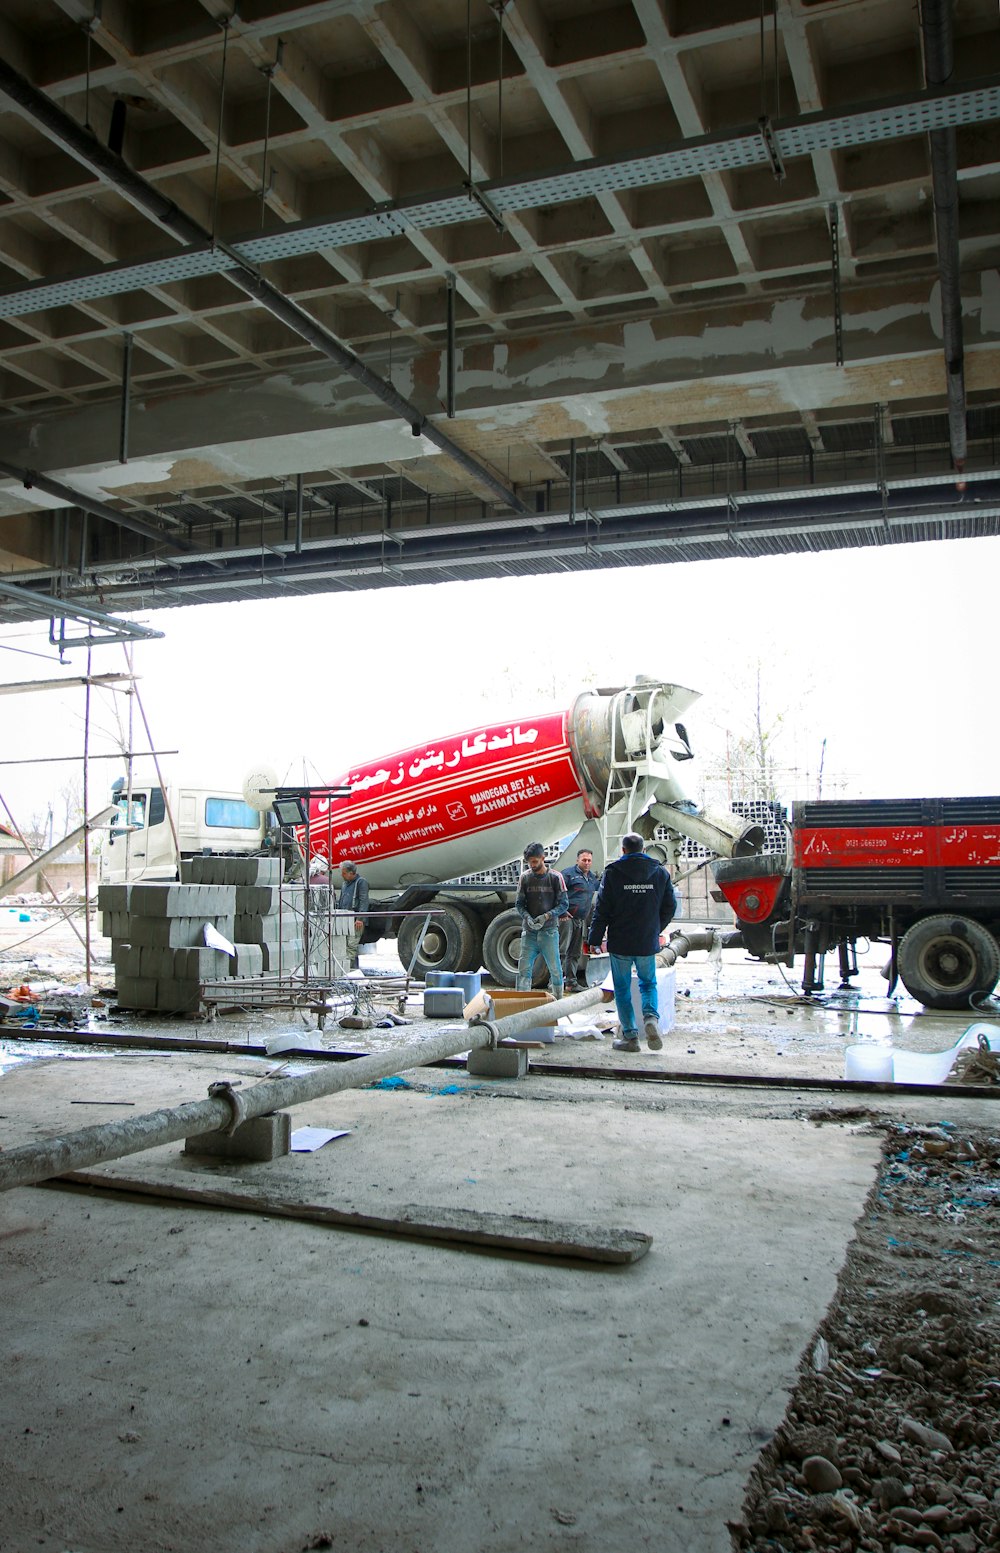 a cement mixer being worked on under a bridge